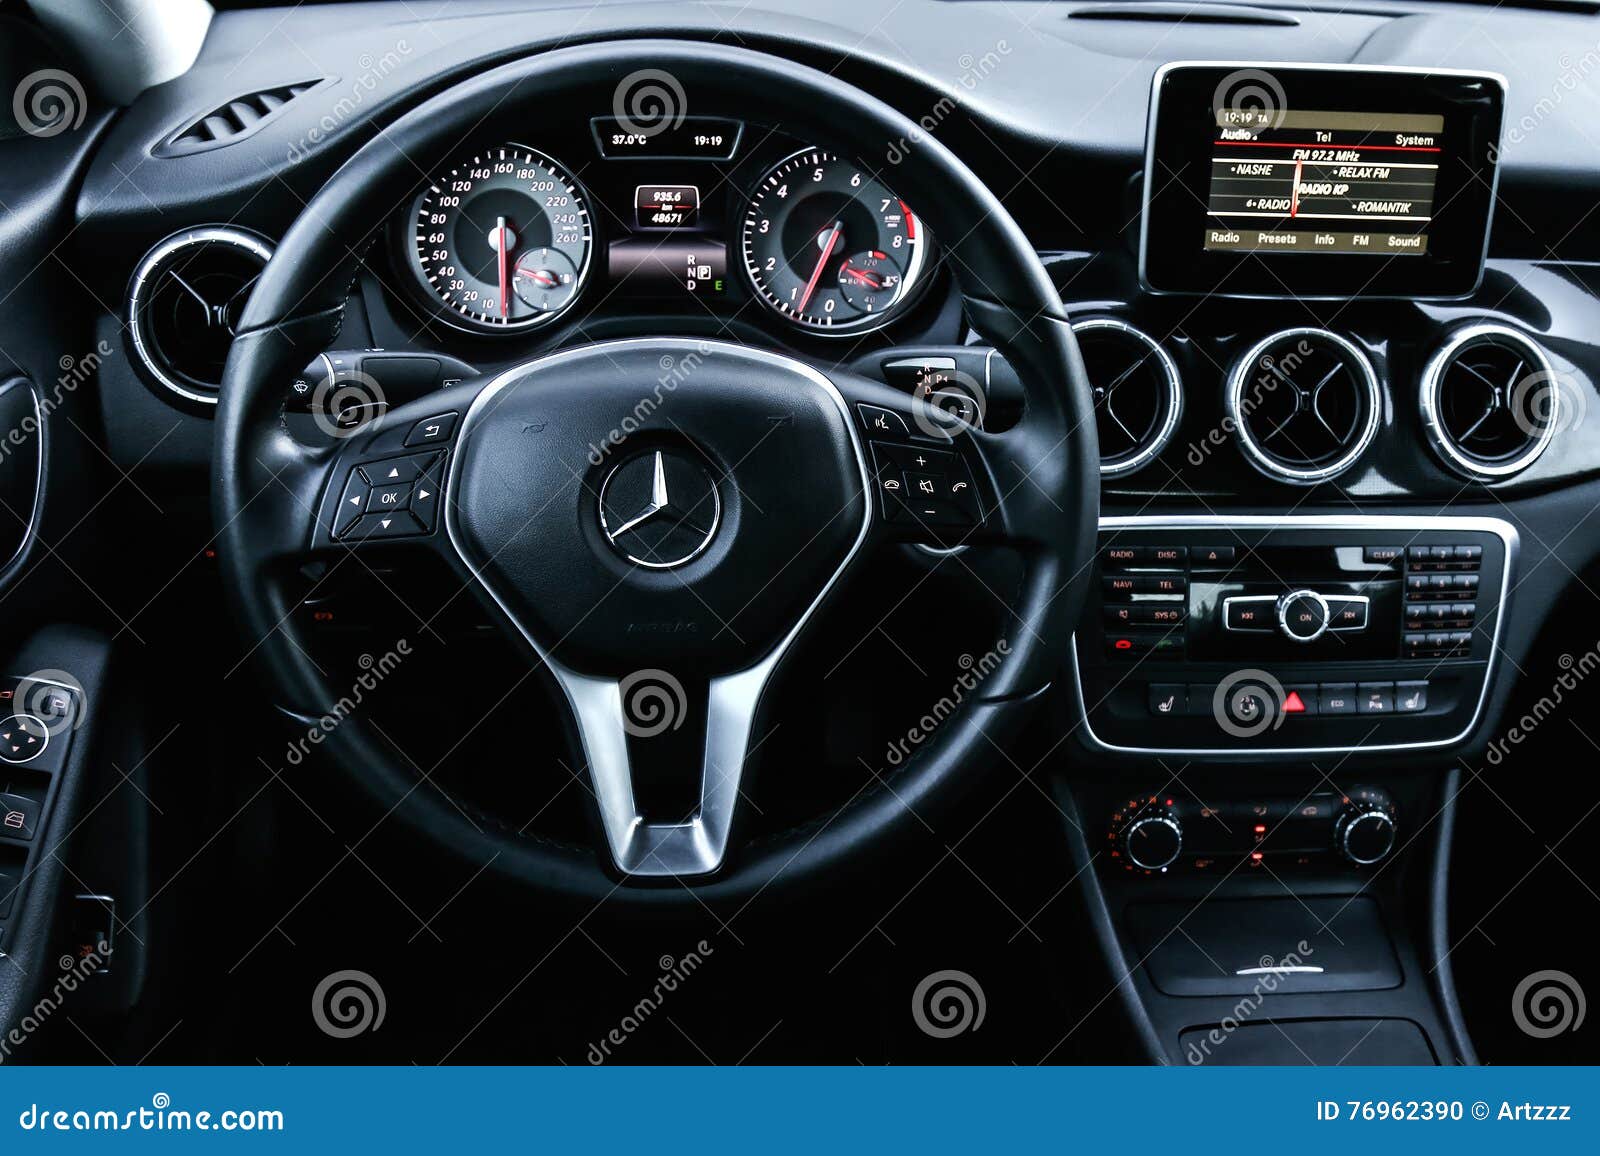 Mercedes Benz C117 Cla200 Editorial Image Image Of Dash